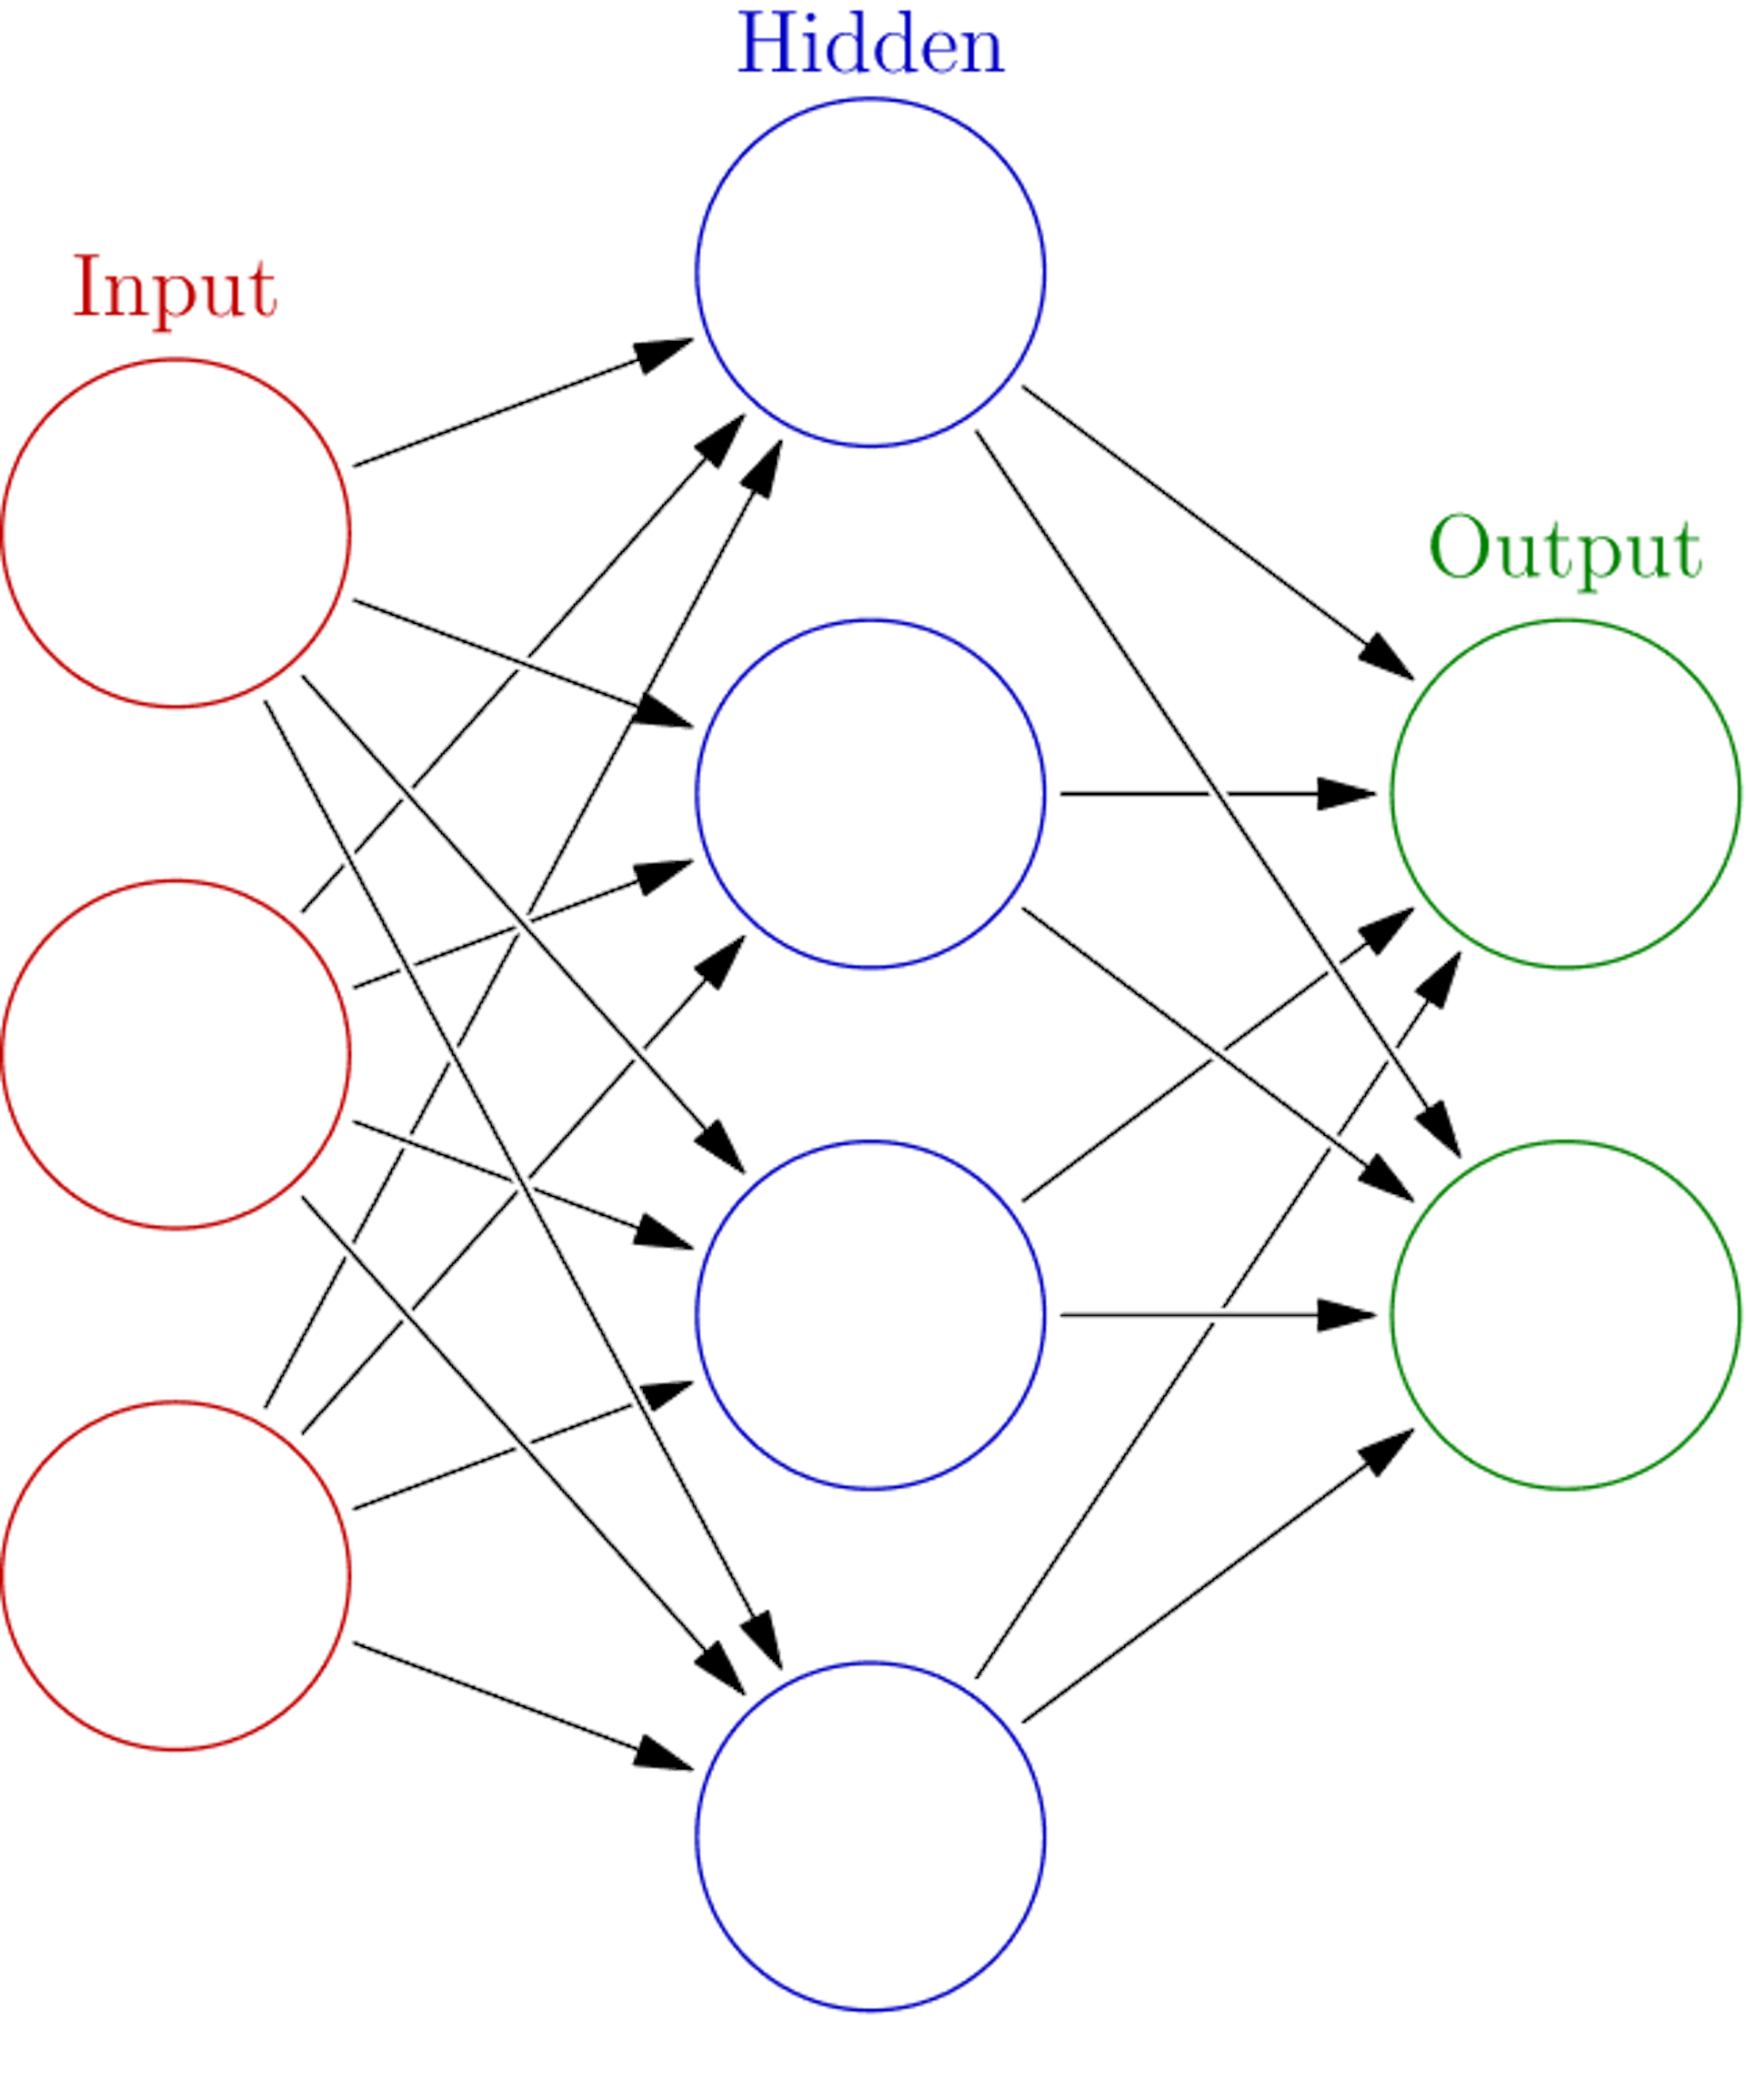 Basic presentation of how neural network works (original: https://en.wikipedia.org/wiki/Neural_network_(machine_learning)#/media/File:Colored_neural_network.svg)